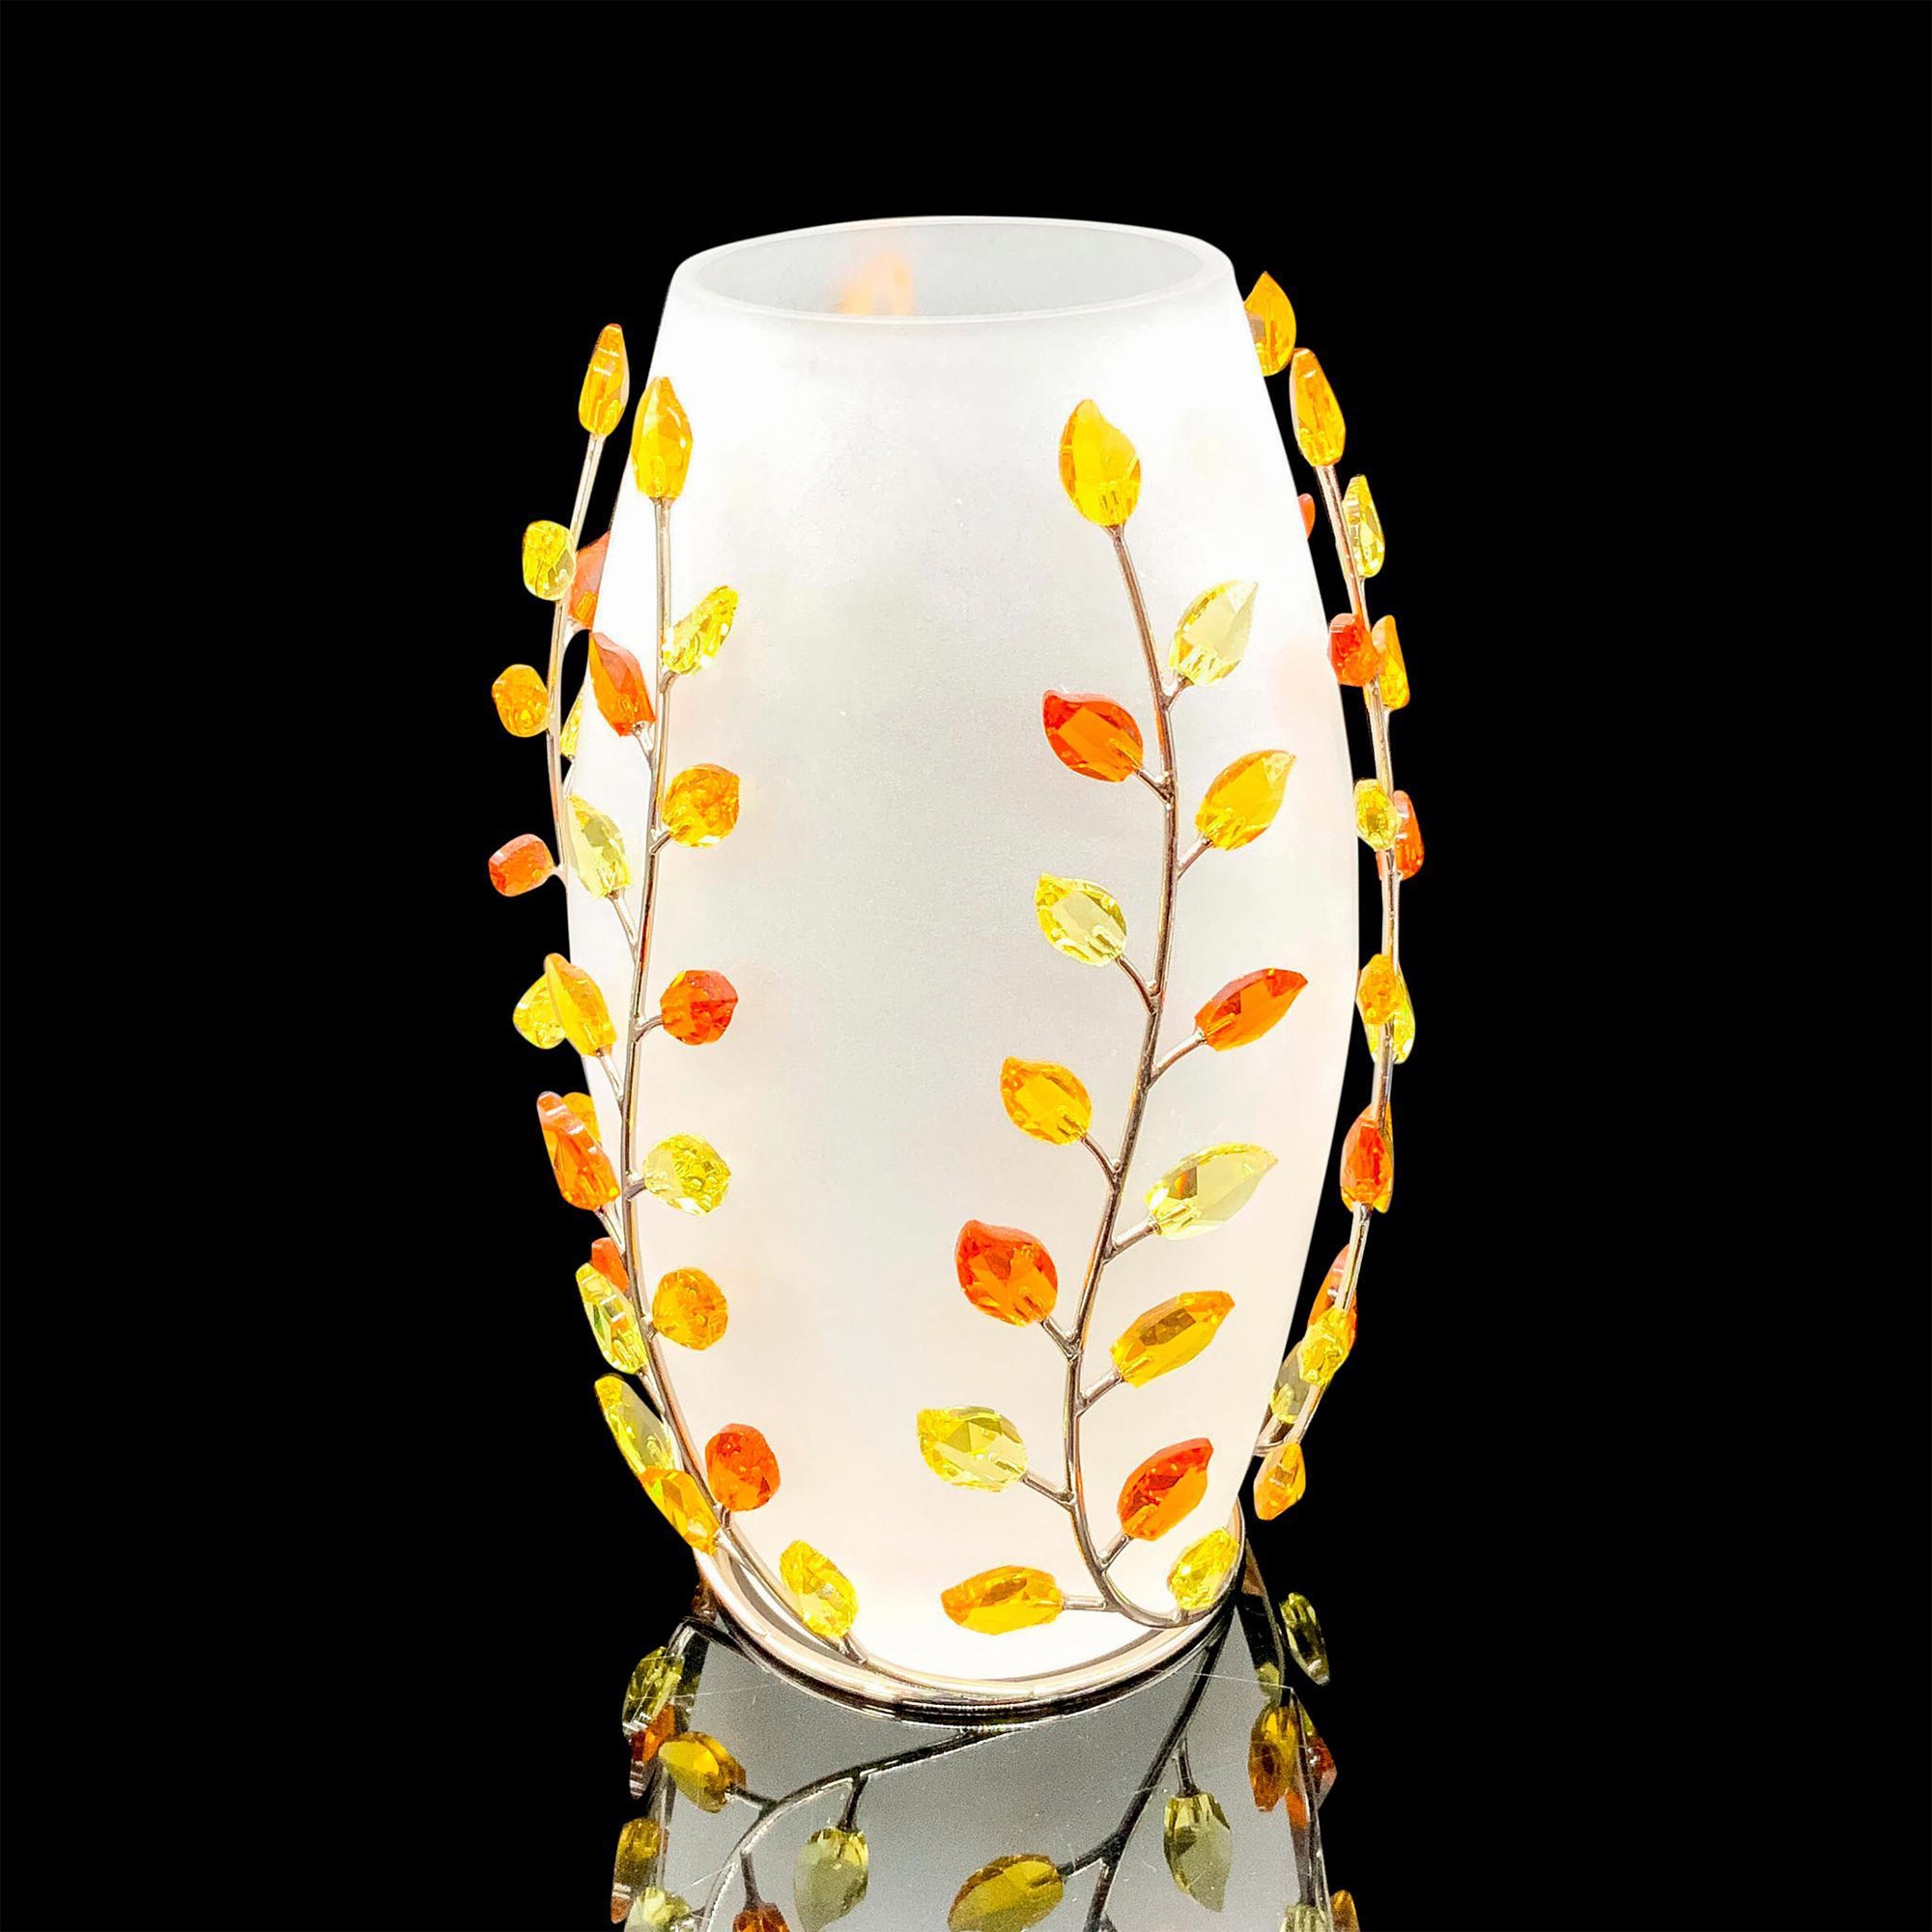 Swarovski Topaz Leaves Crystal Vase - Image 2 of 4